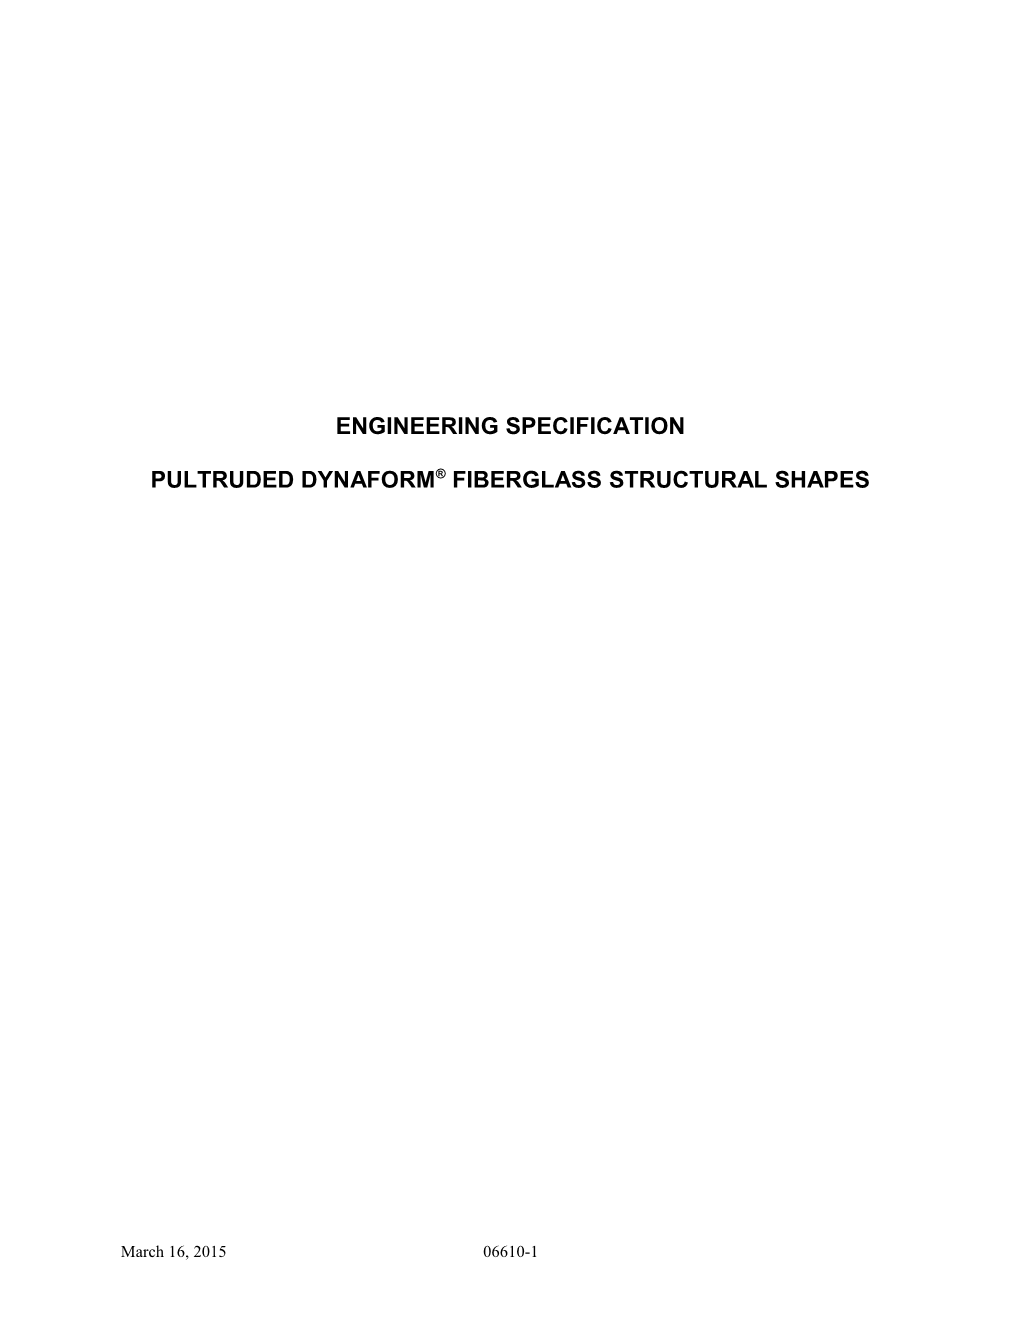 Pultruded Dynaform Fiberglass Structural Shapes